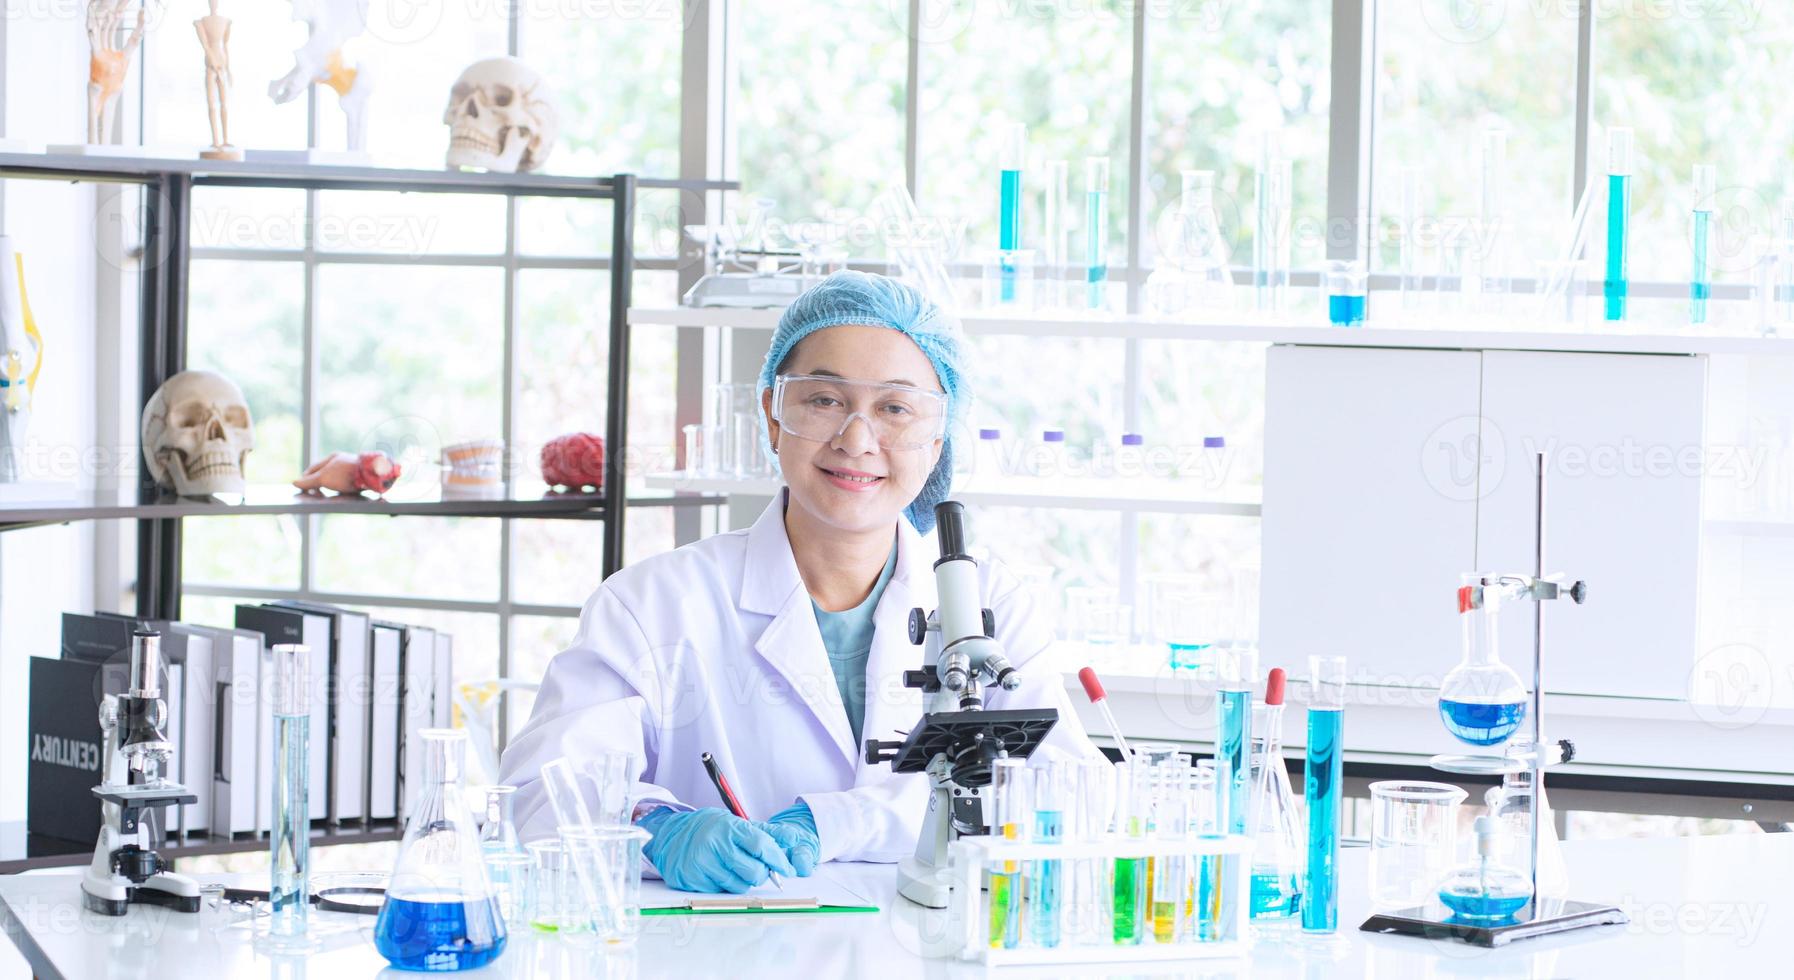 asiatisk kvinnlig forskare, forskare, tekniker eller student genomförde forskning i laboratorium foto